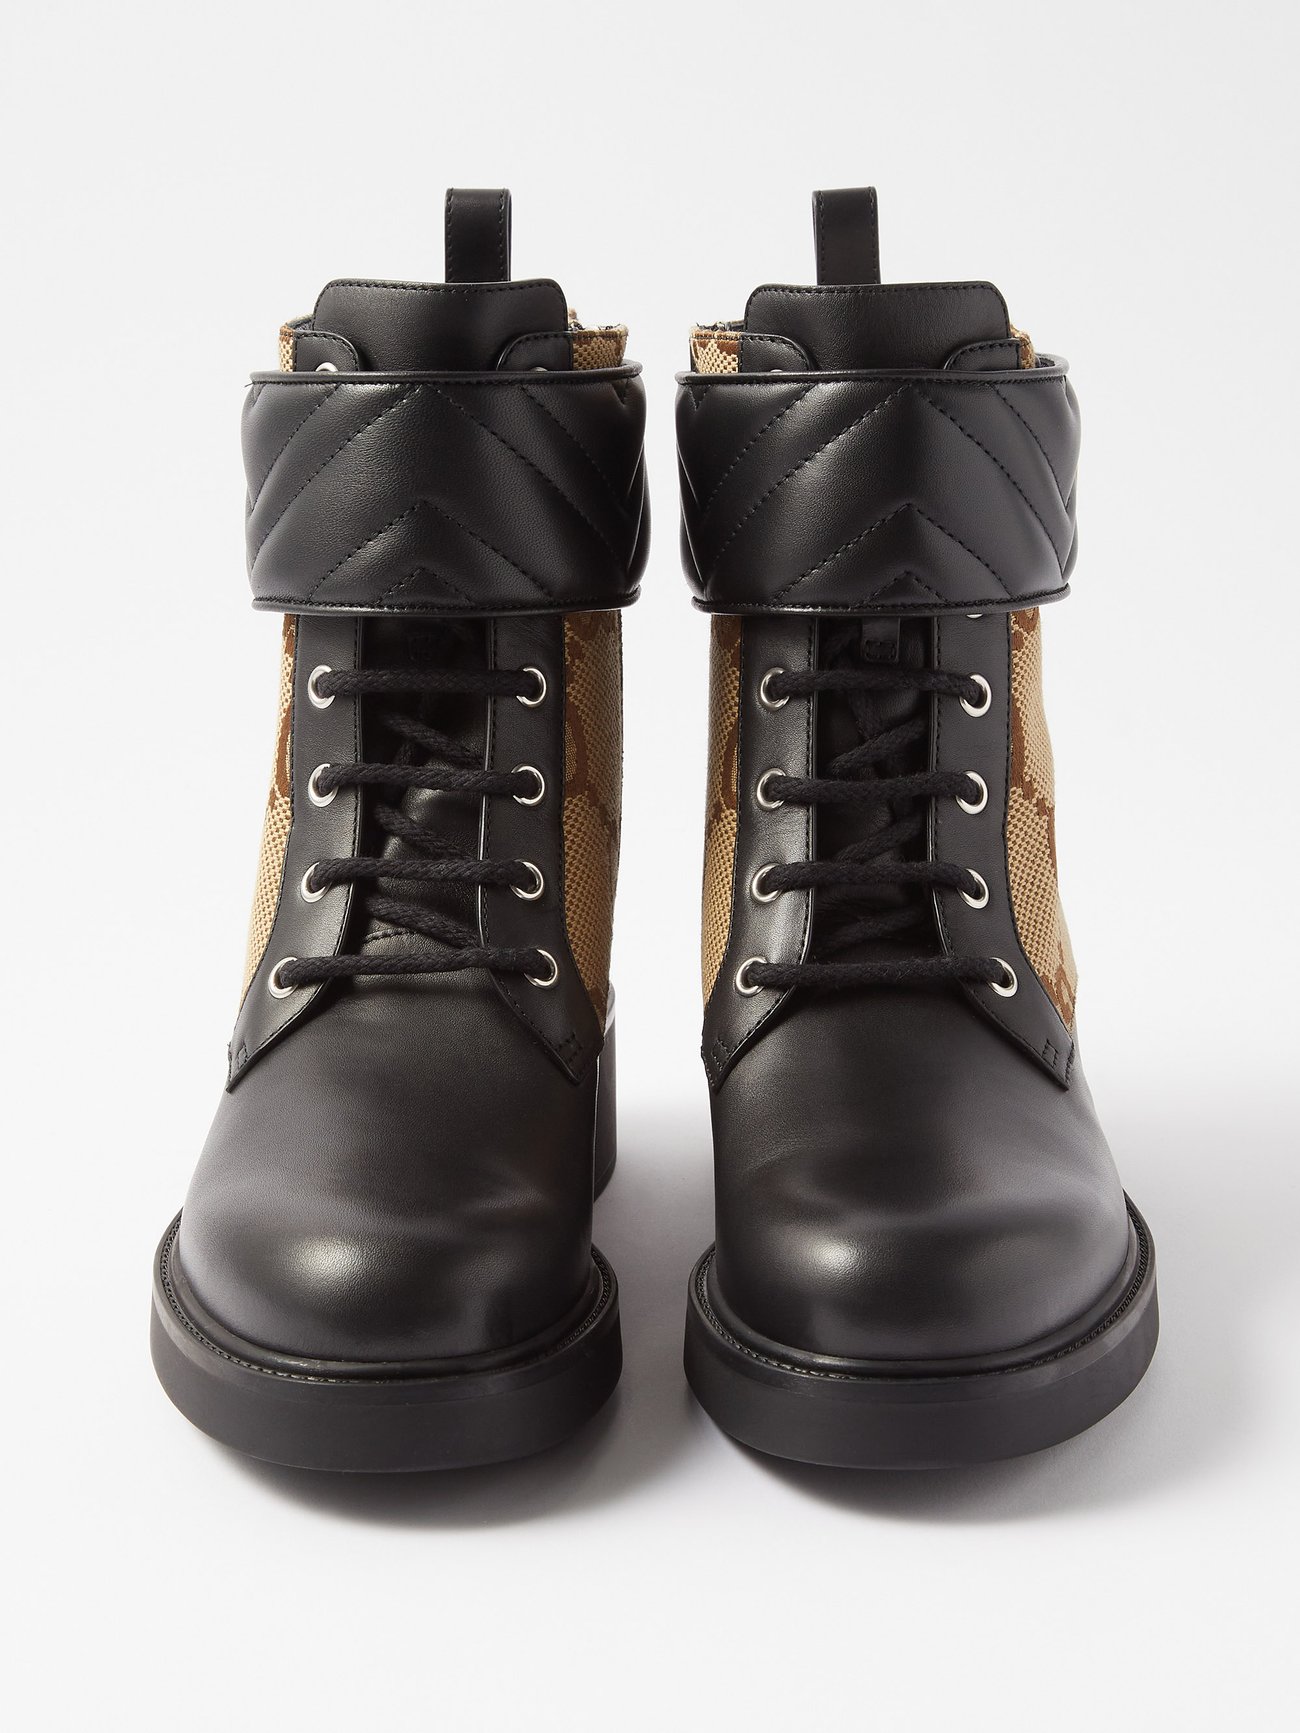 Wonderland leather snow boots Louis Vuitton Brown size 38 EU in